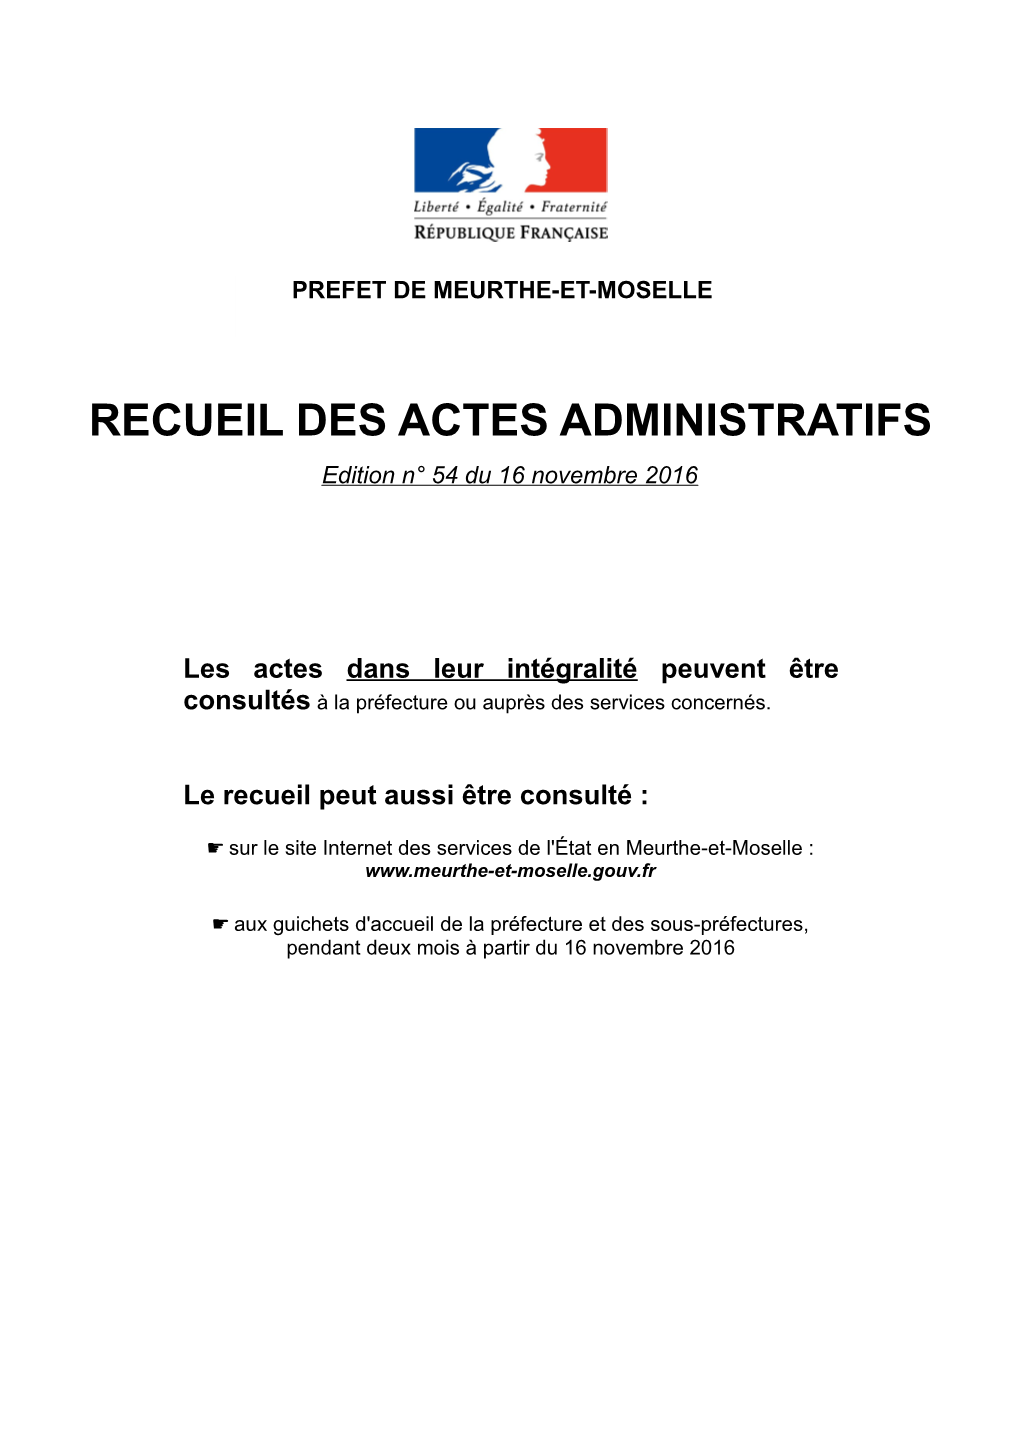 RECUEIL DES ACTES ADMINISTRATIFS Edition N° 54 Du 16 Novembre 2016